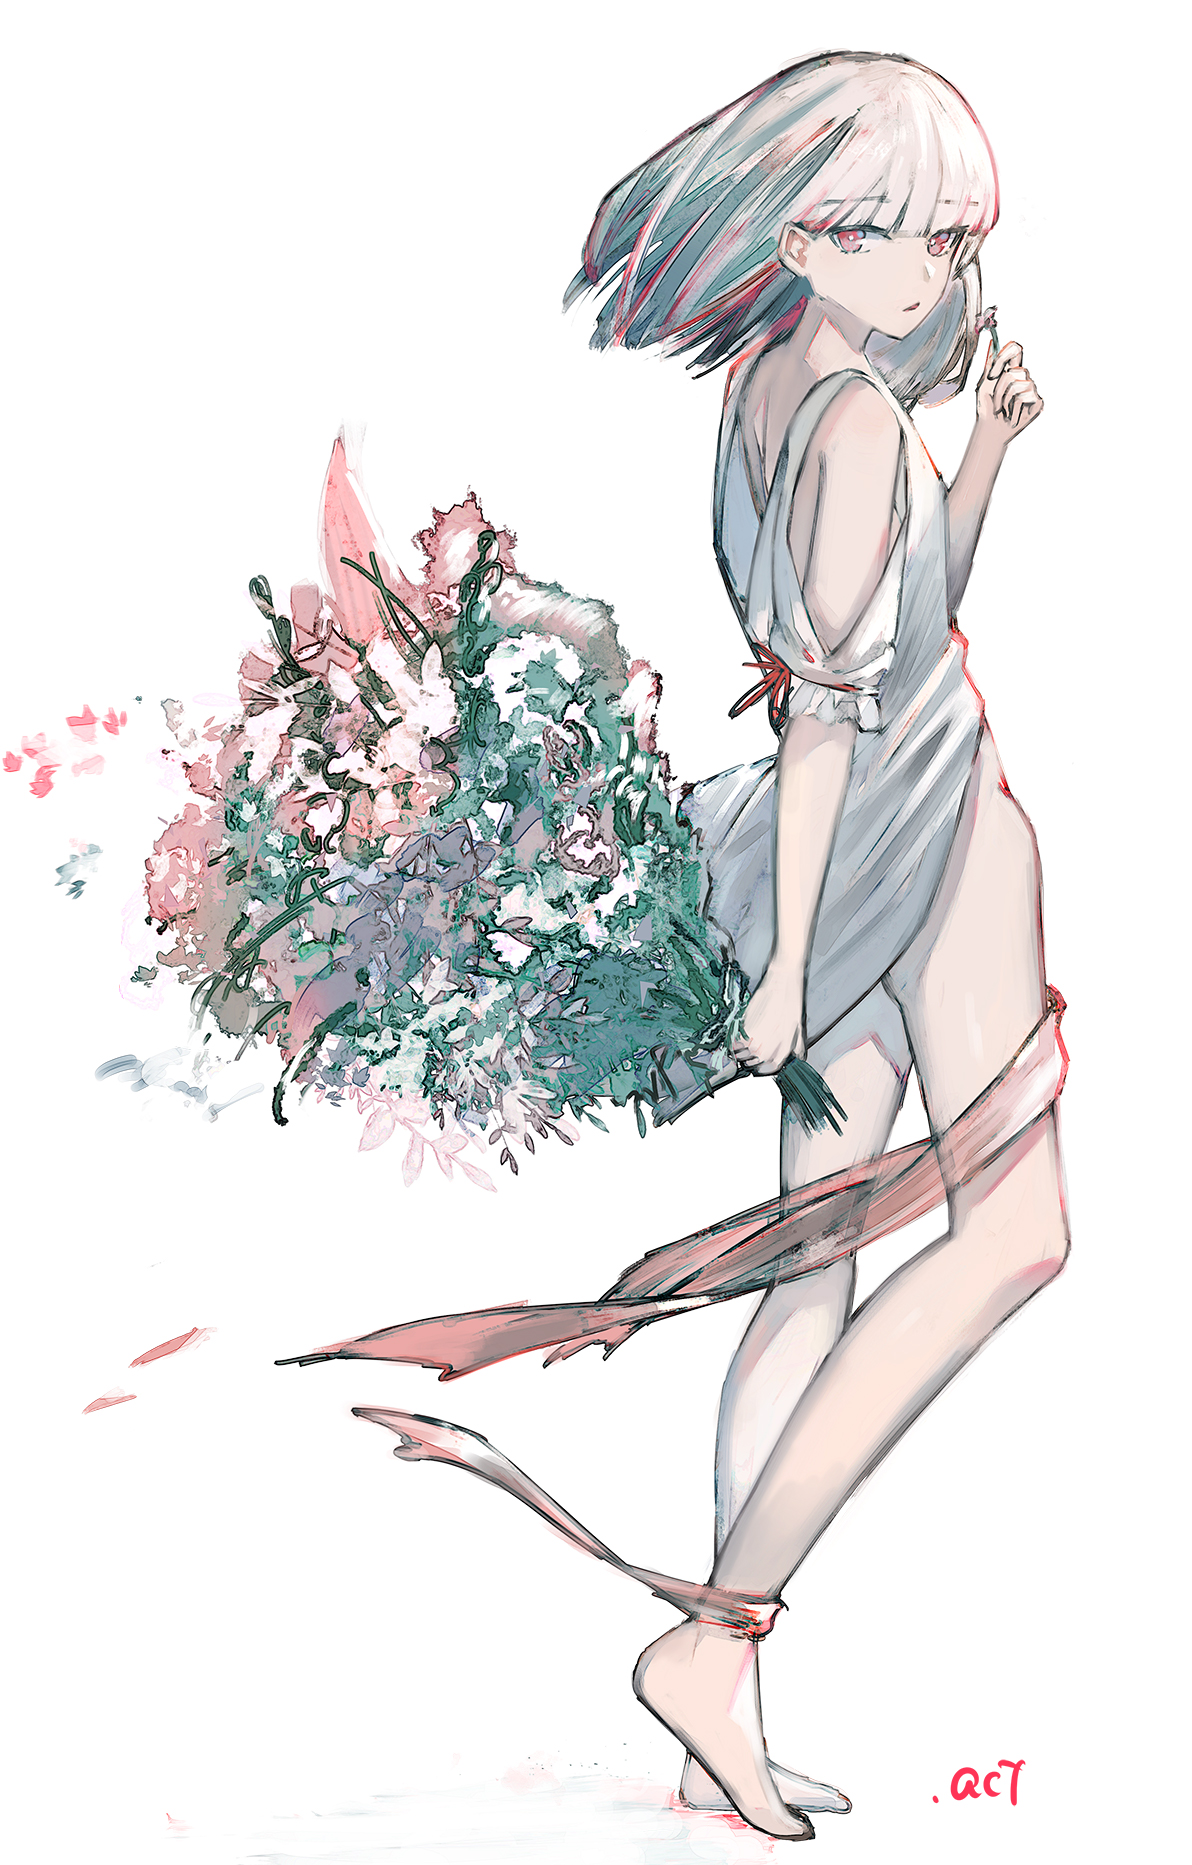 bouquet (of flowers)